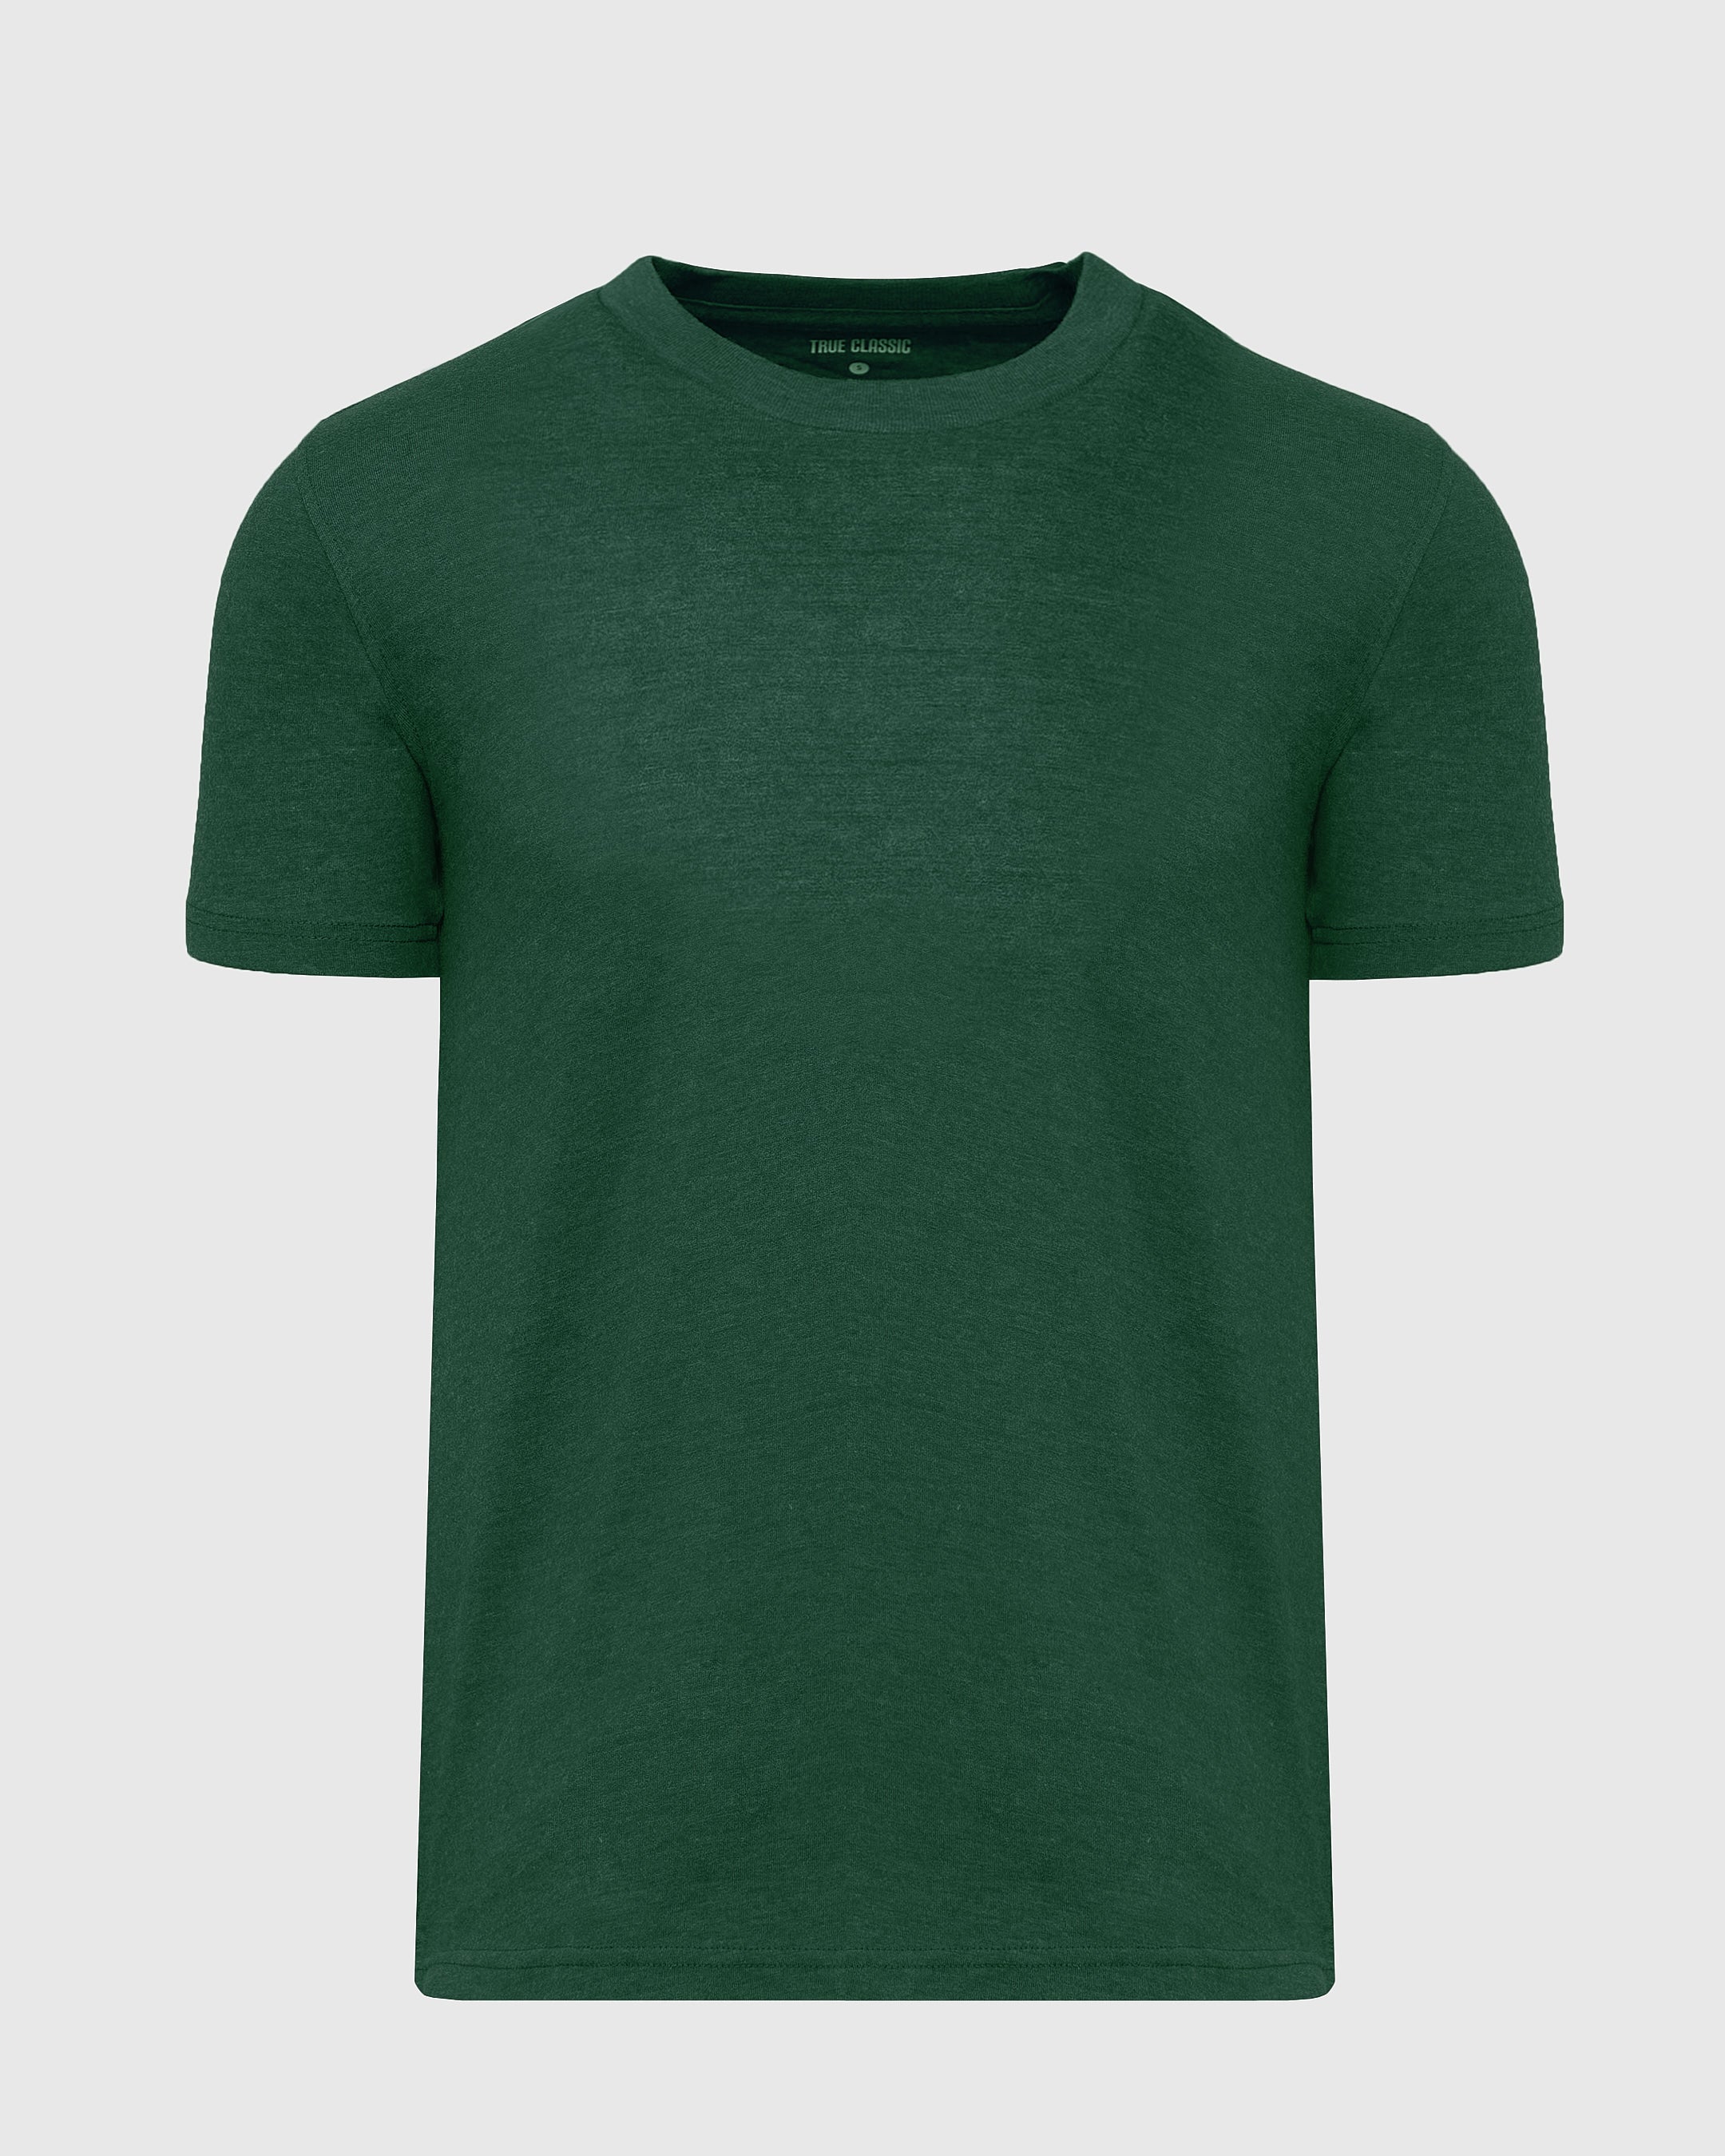 Evergreen Heather Crew Neck T-Shirt